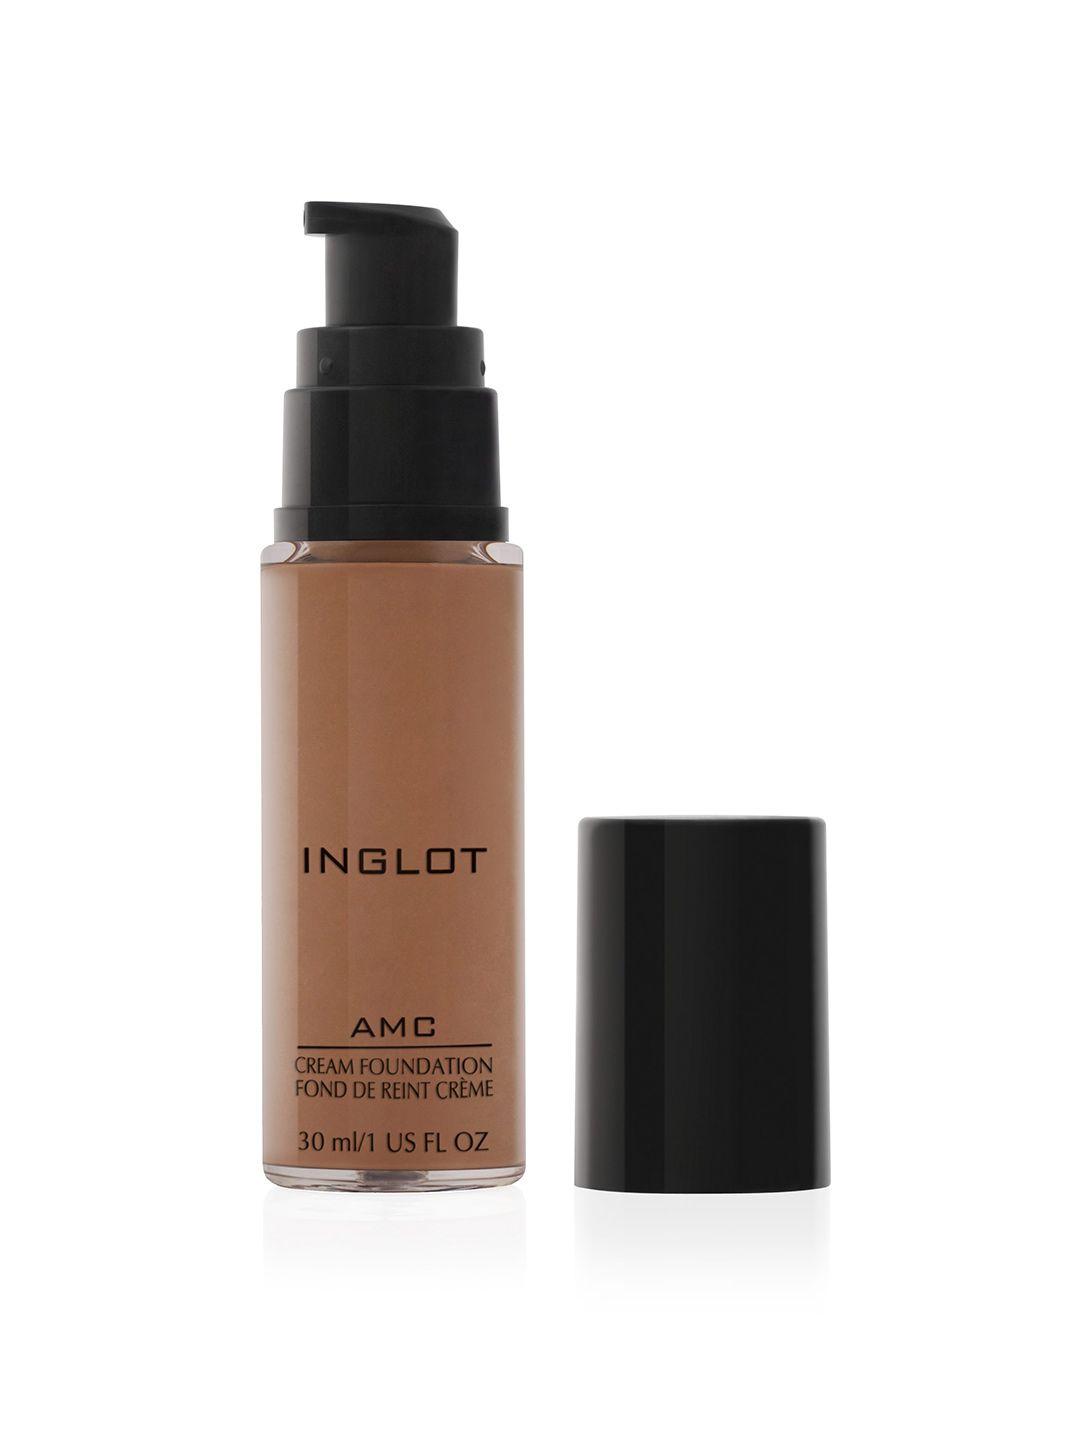 inglot amc cream foundation 30ml - nude mw 200